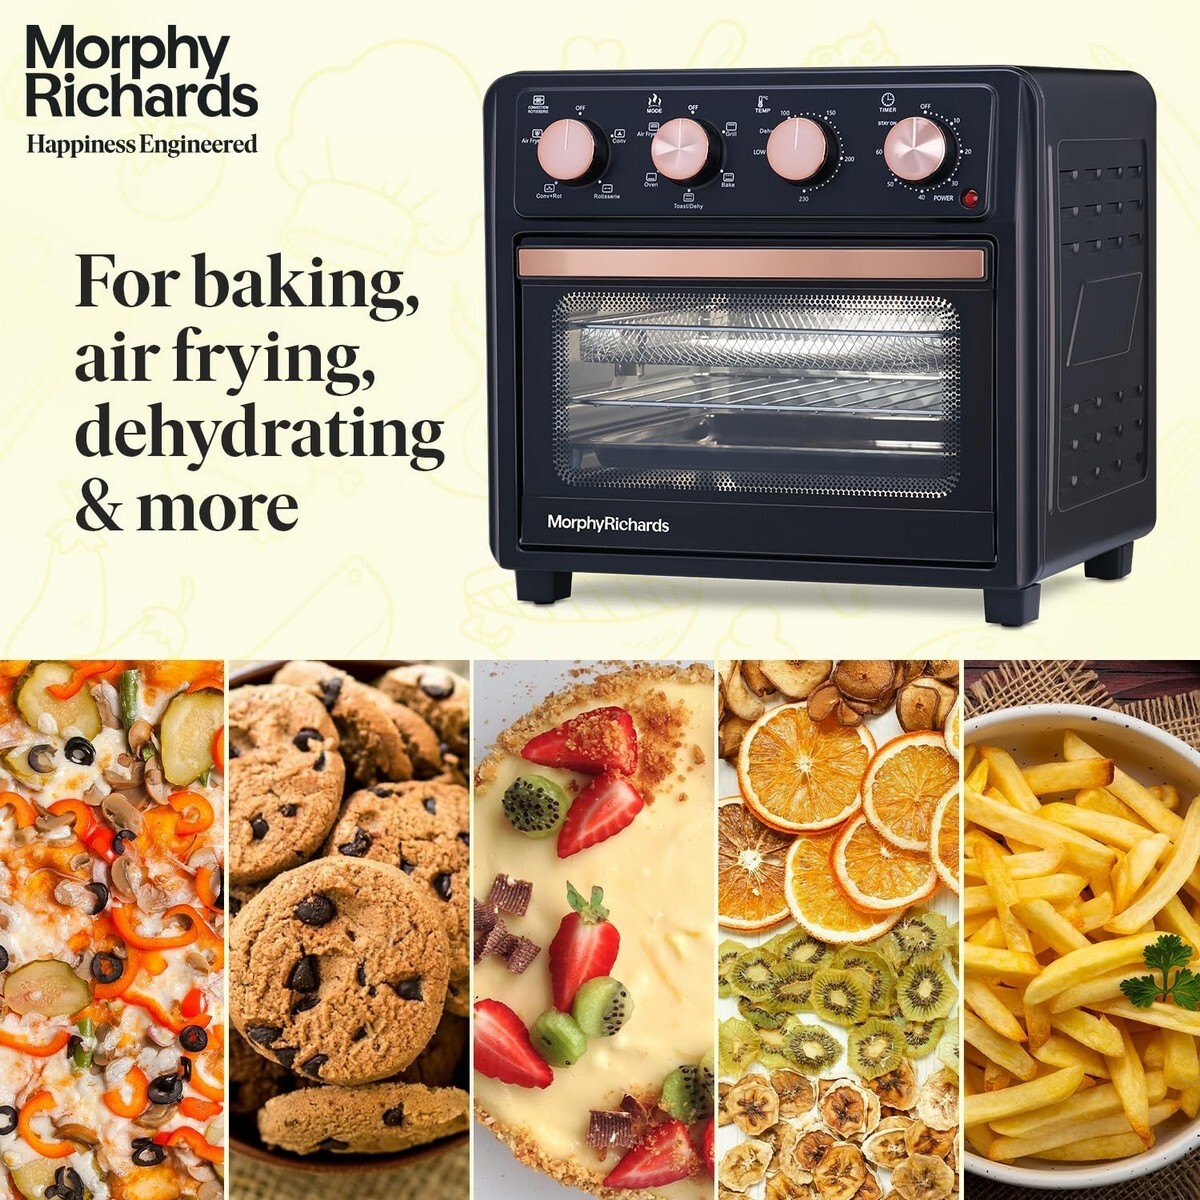 Morphy Richards AirCrisp 25L Air Fryer Oven